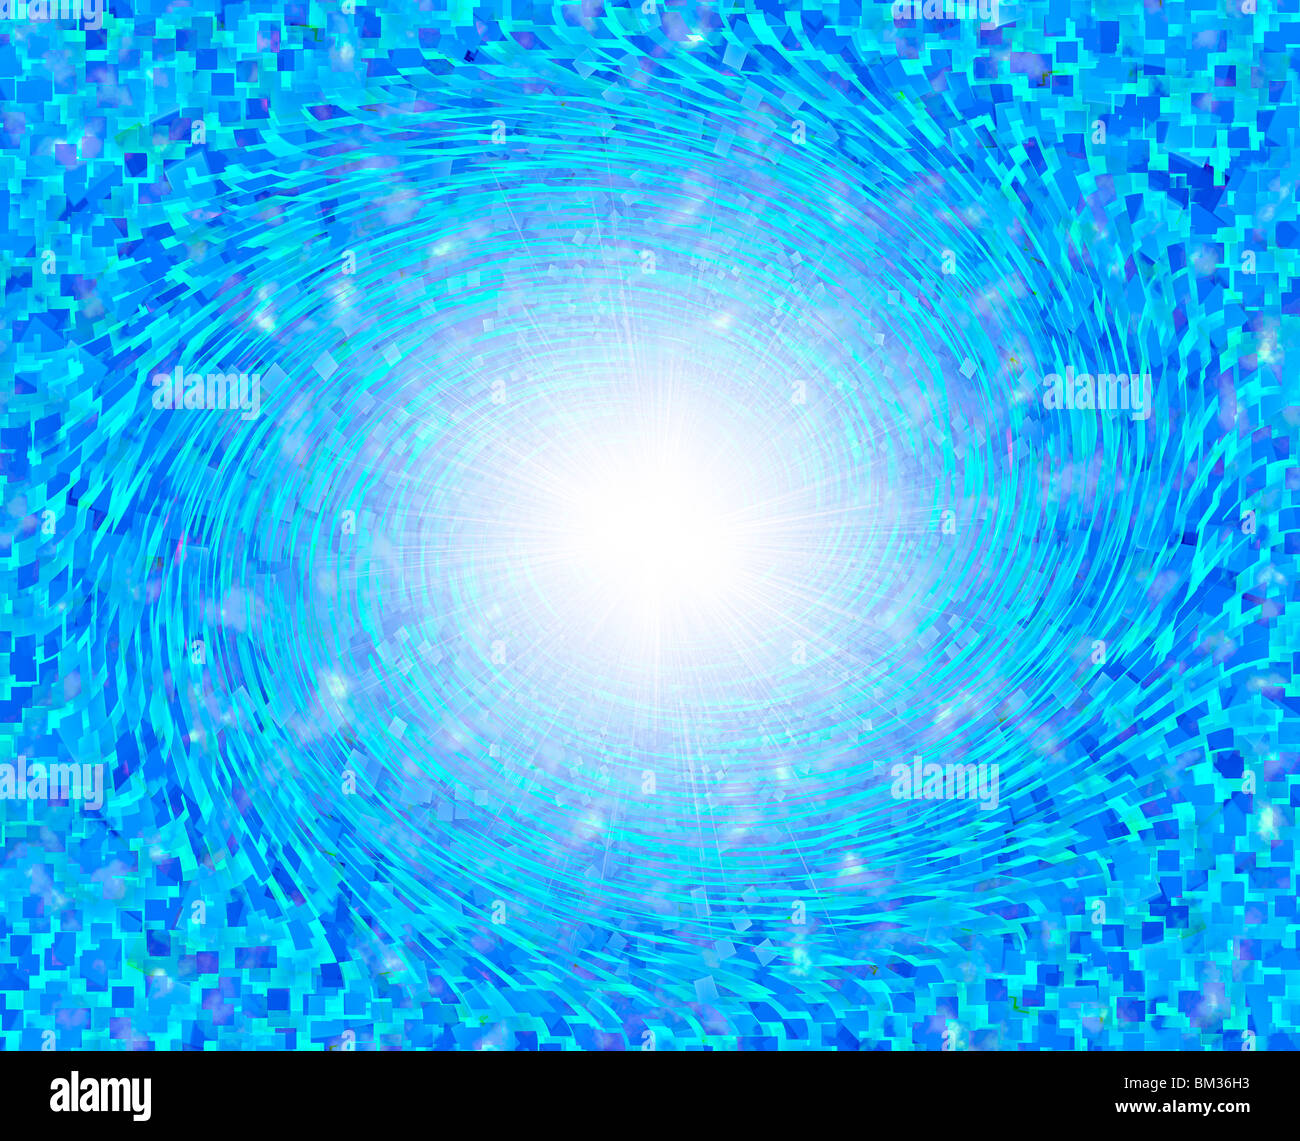 Vortex of light on blue background, computer graphic Stock Photo